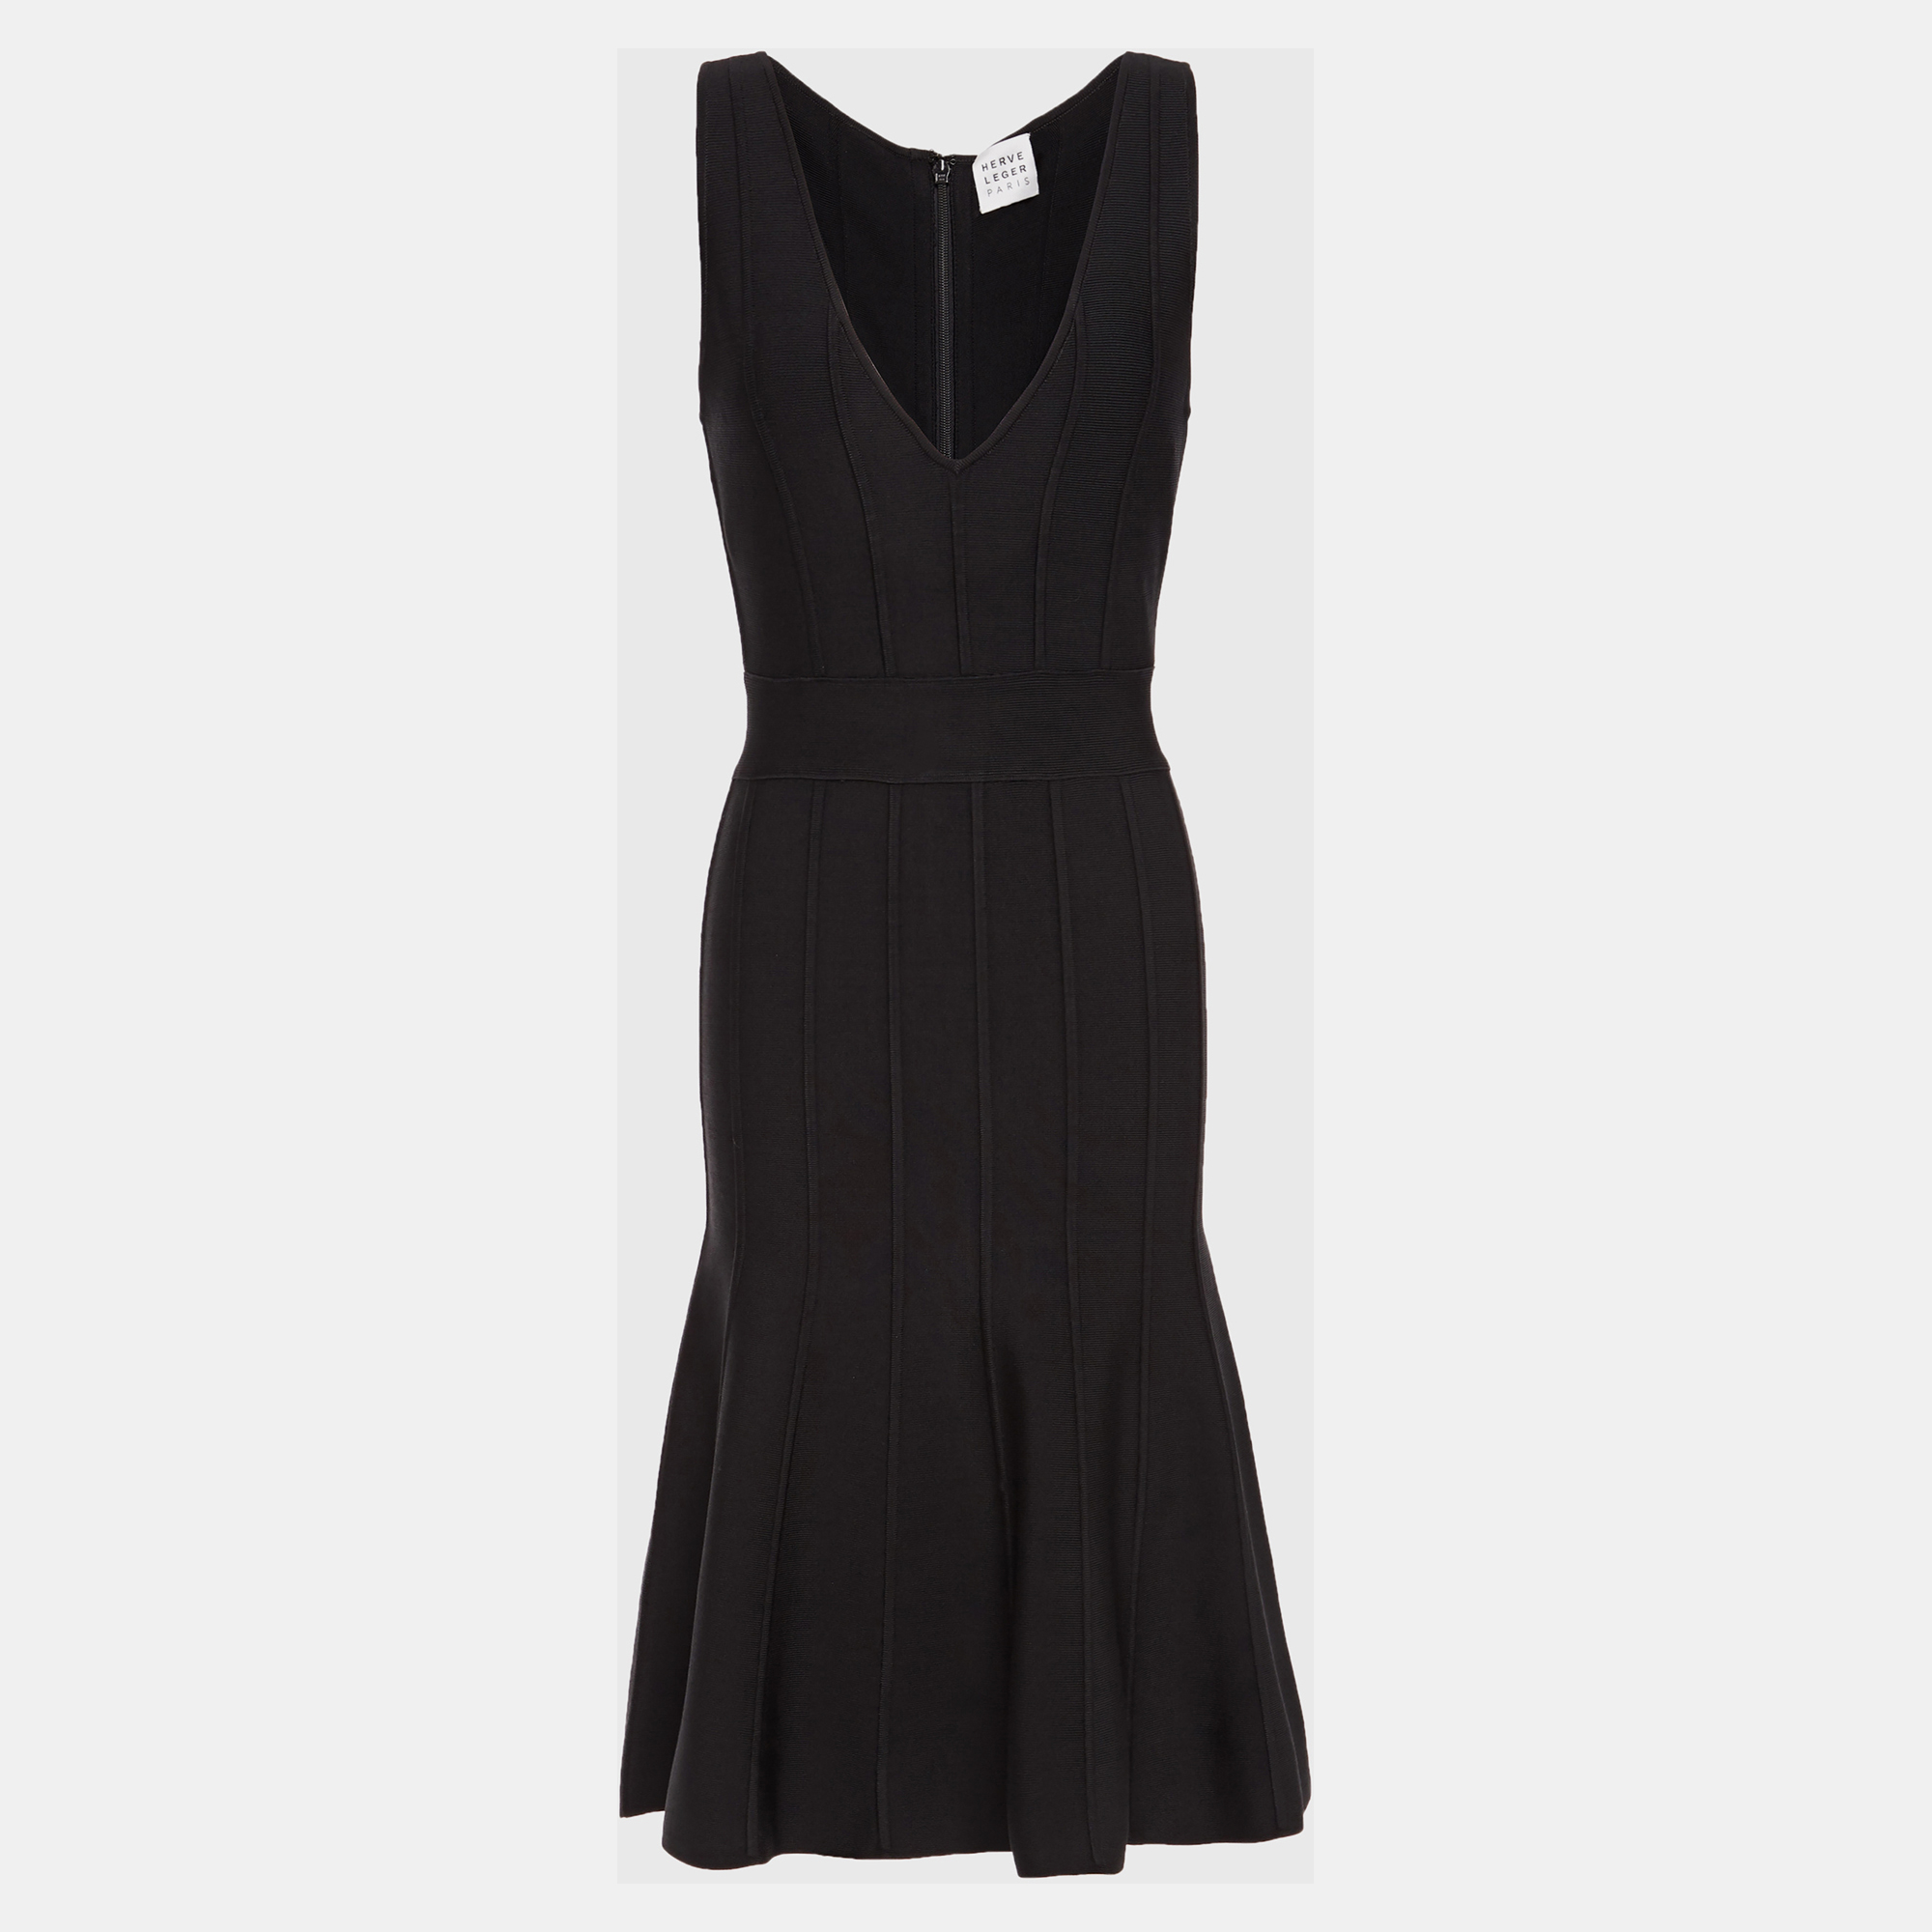 Black Knit Sleeveless Knee Length Dress